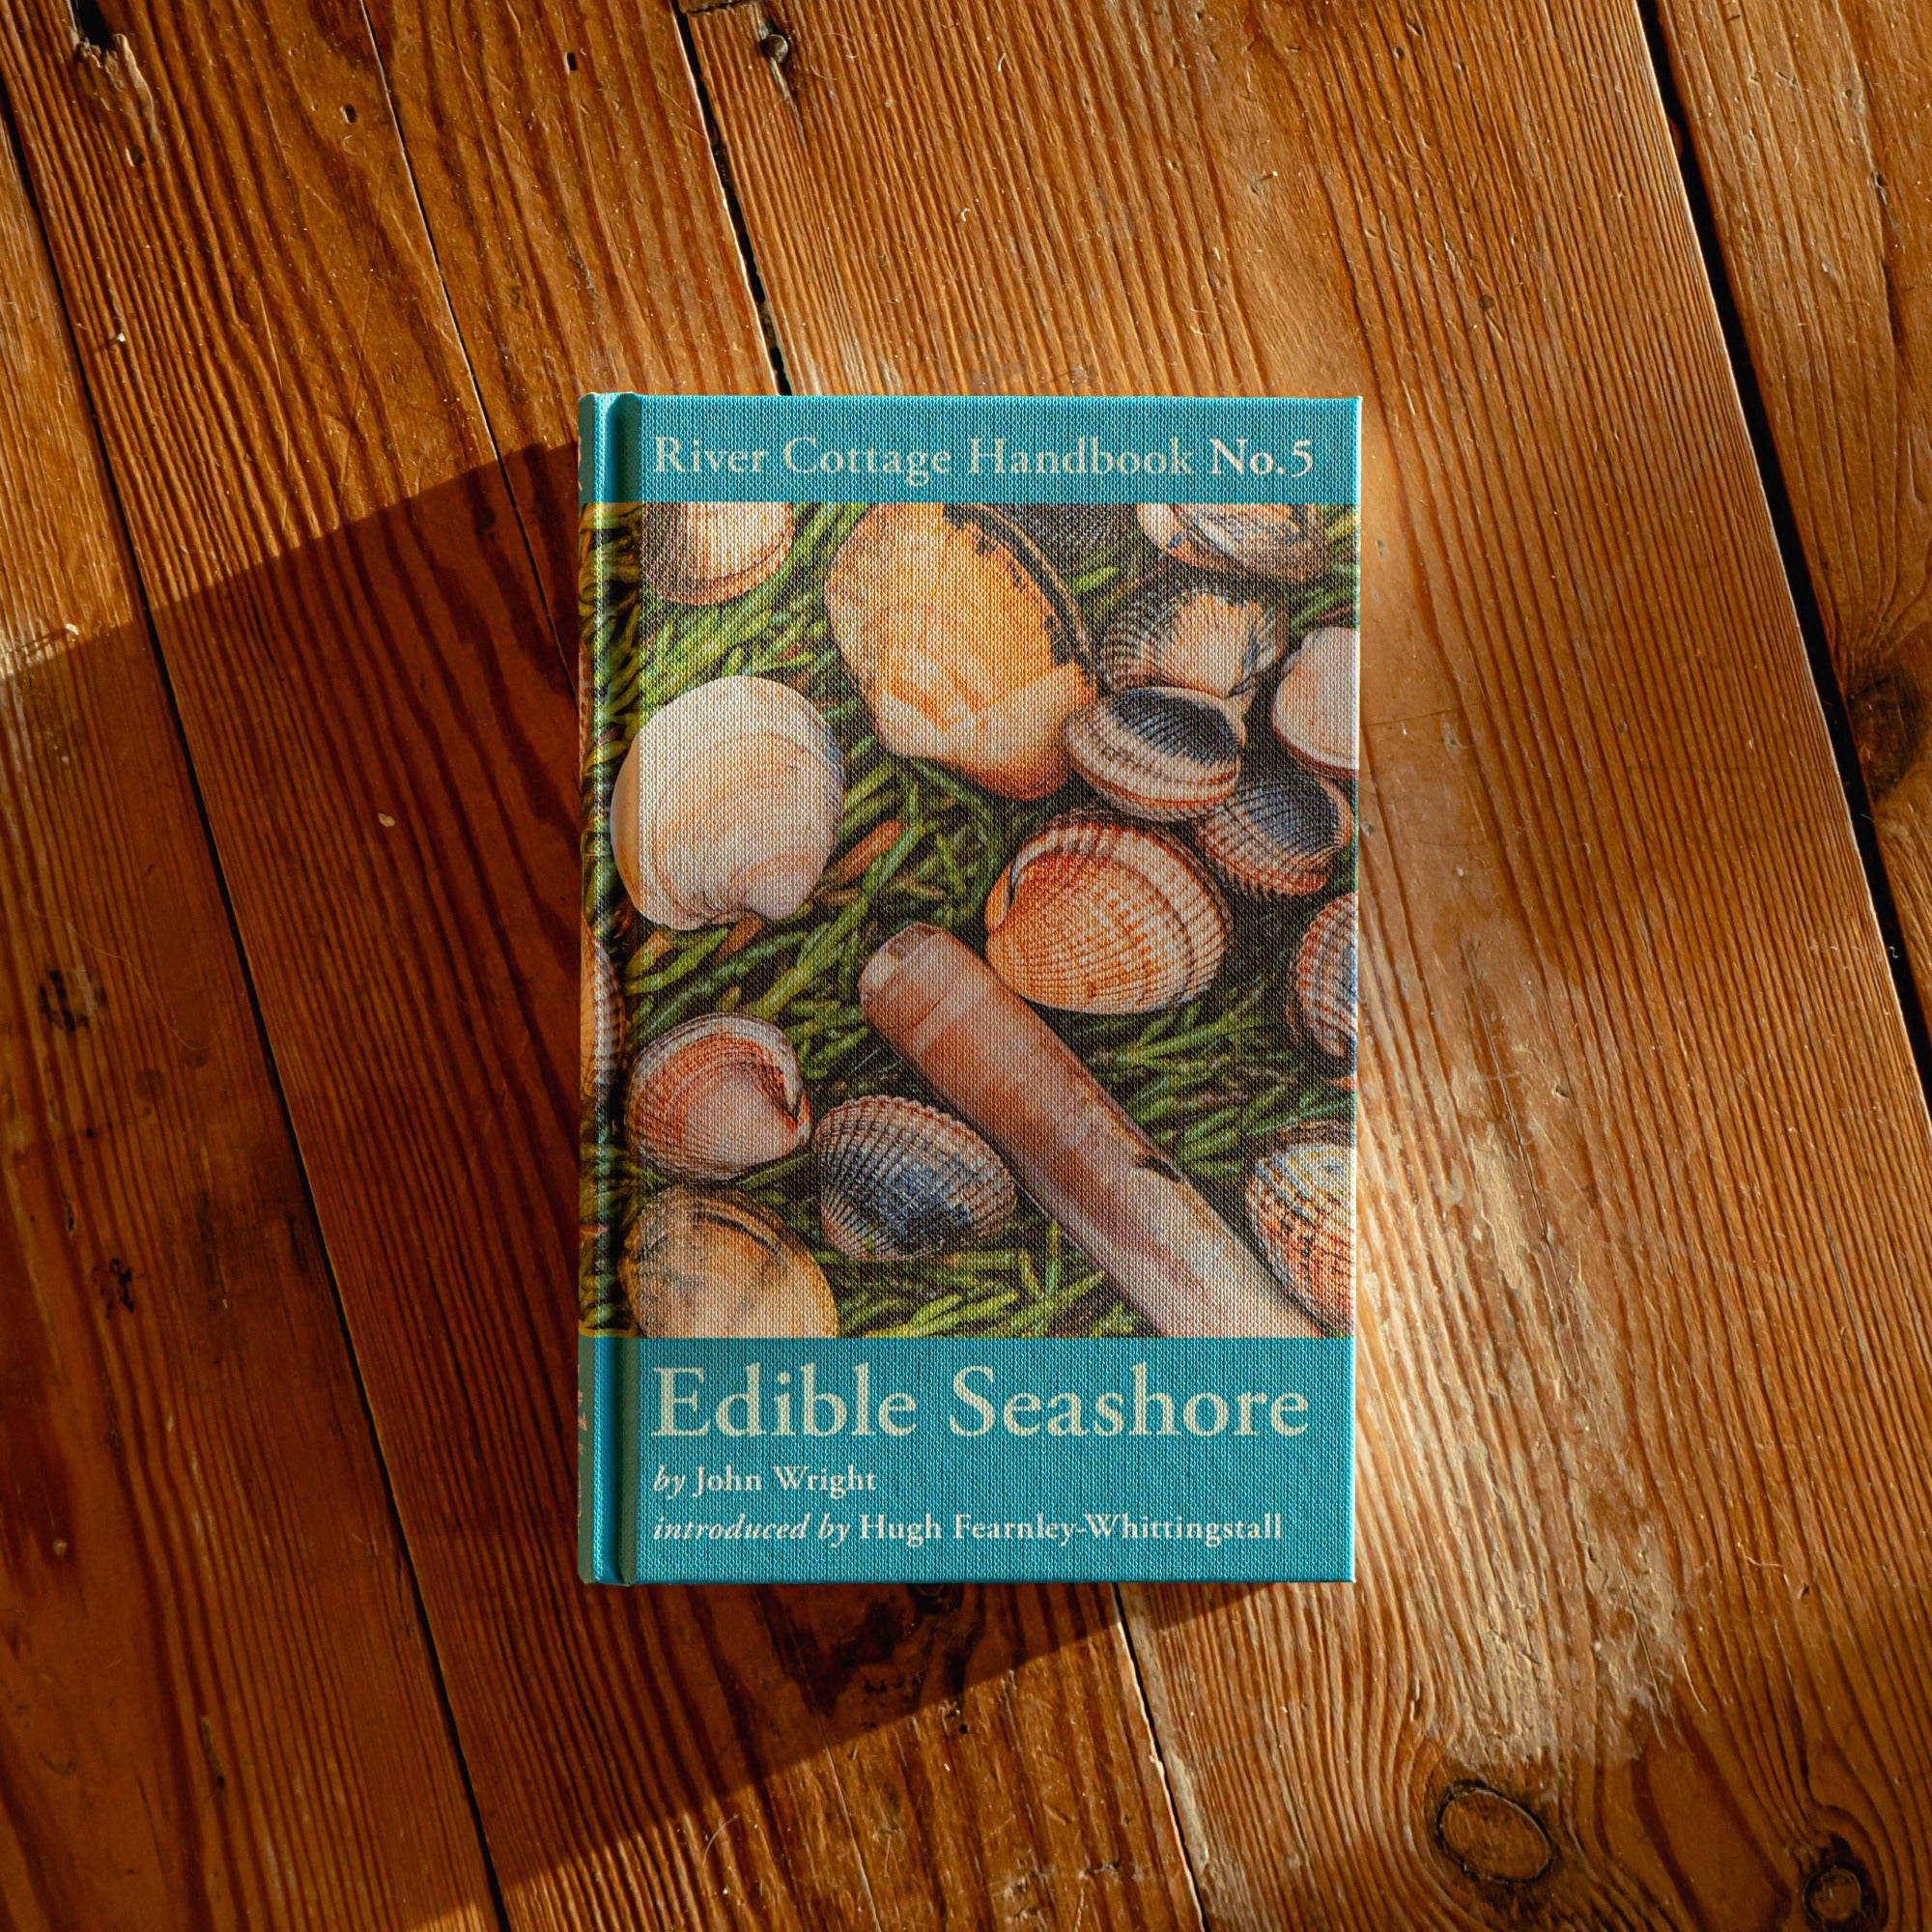 River Cottage Handbook 5: Edible Seashore